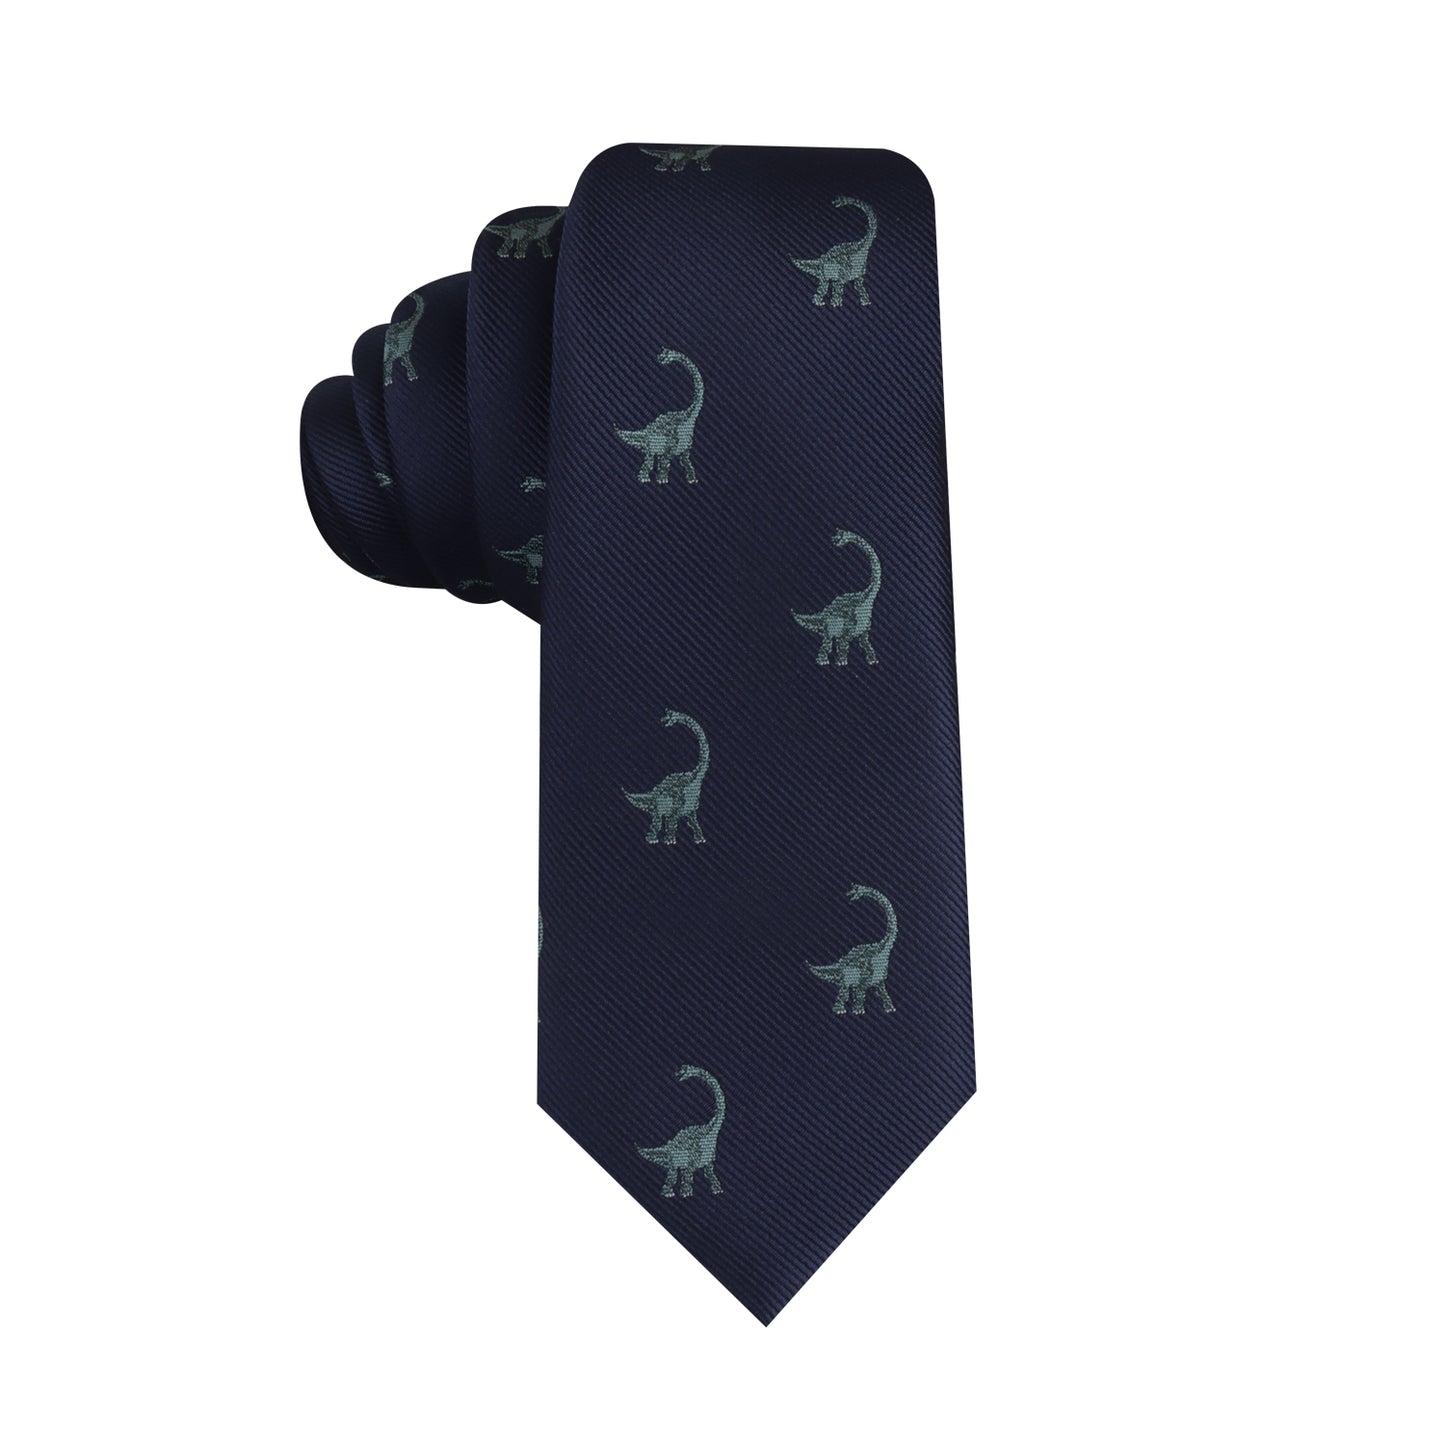 A neck tie with Brontosaurus Skinny Tie elegance.